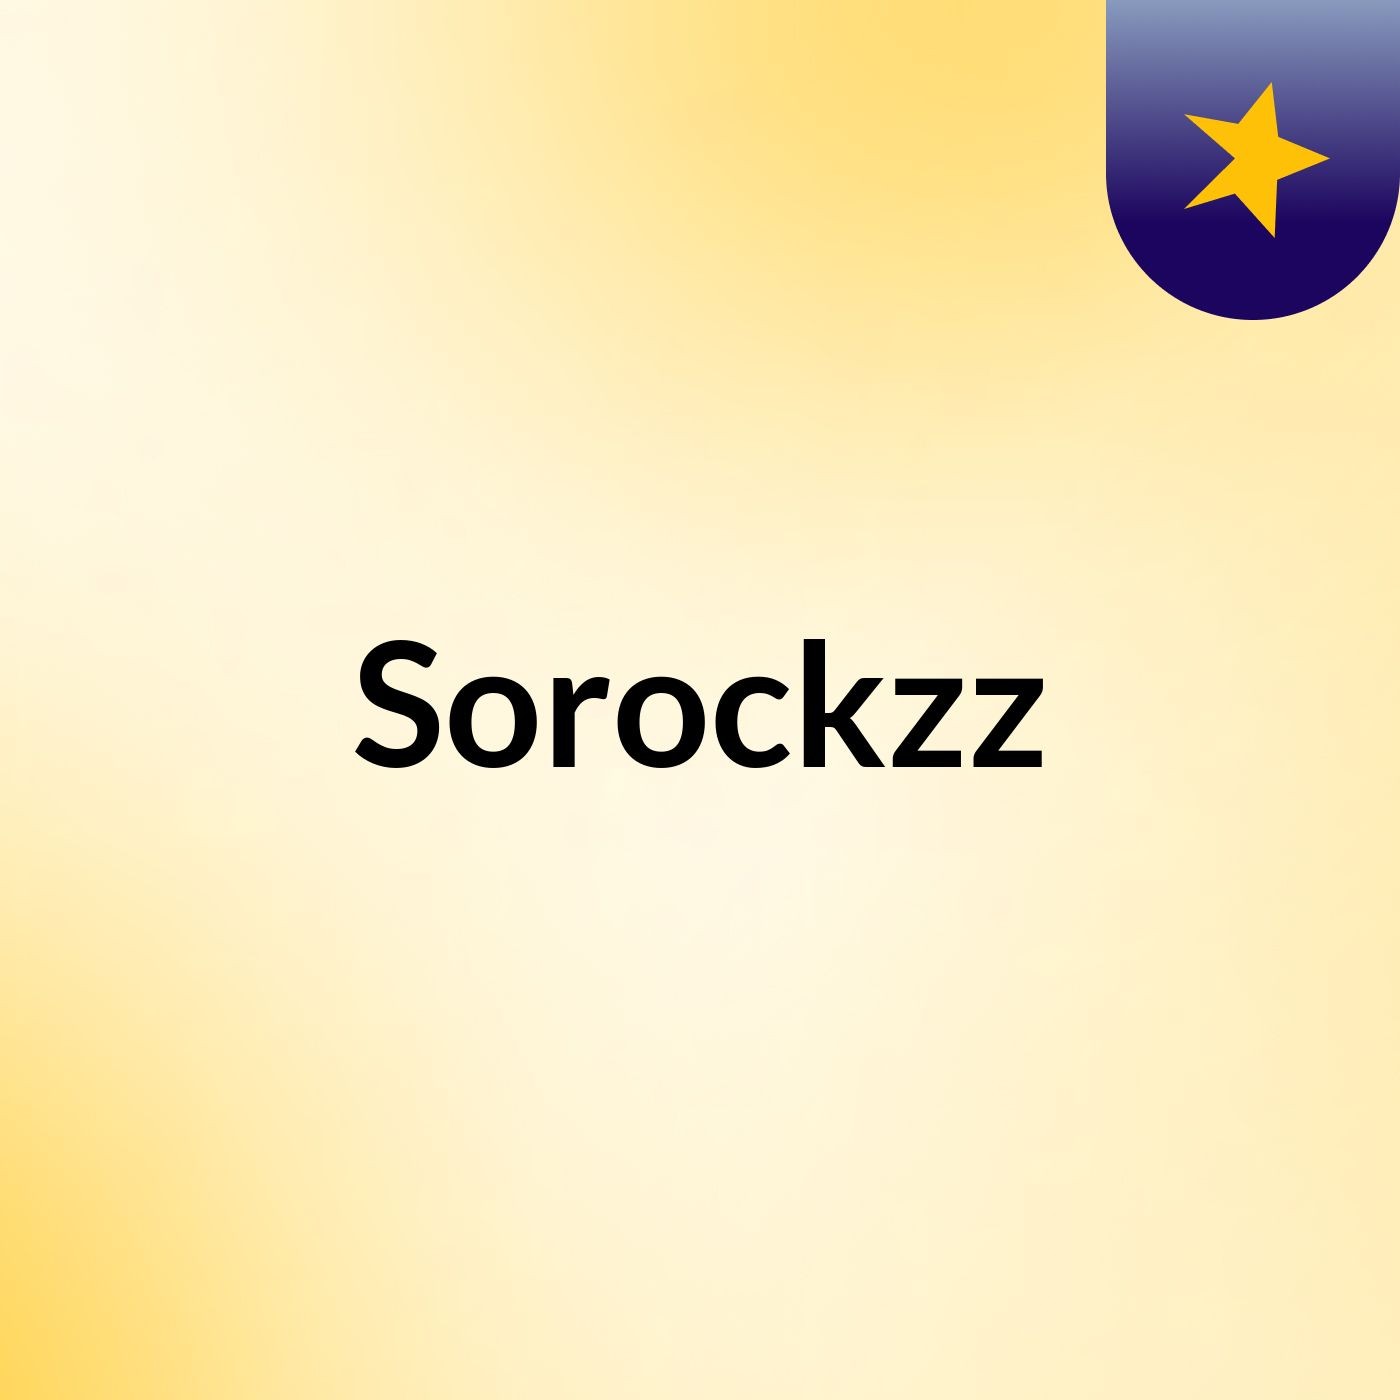 Sorockzz